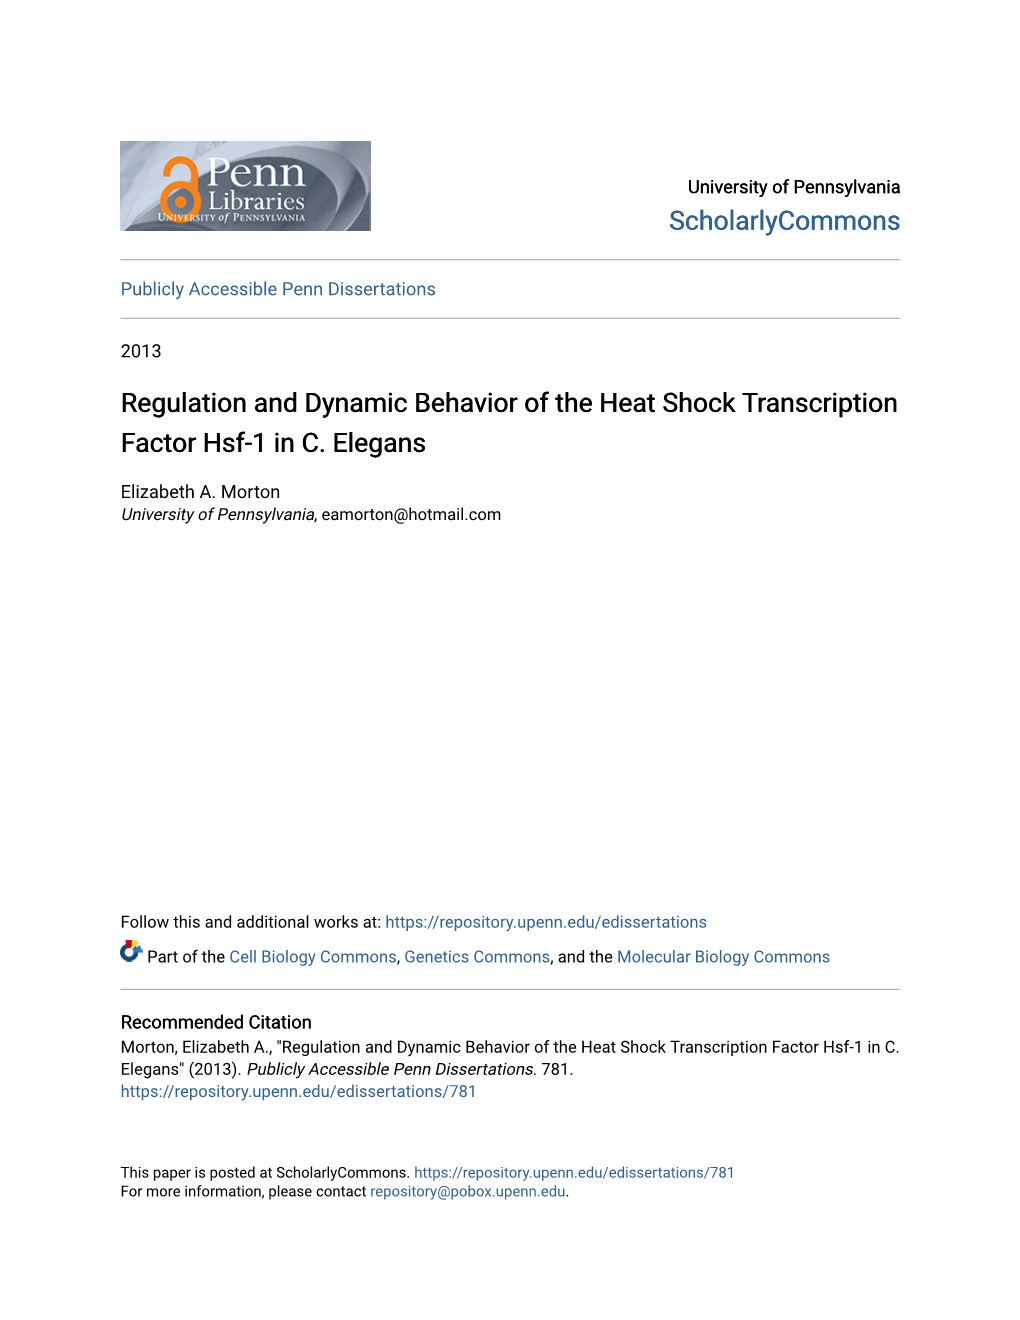 Regulation and Dynamic Behavior of the Heat Shock Transcription Factor Hsf-1 in C. Elegans